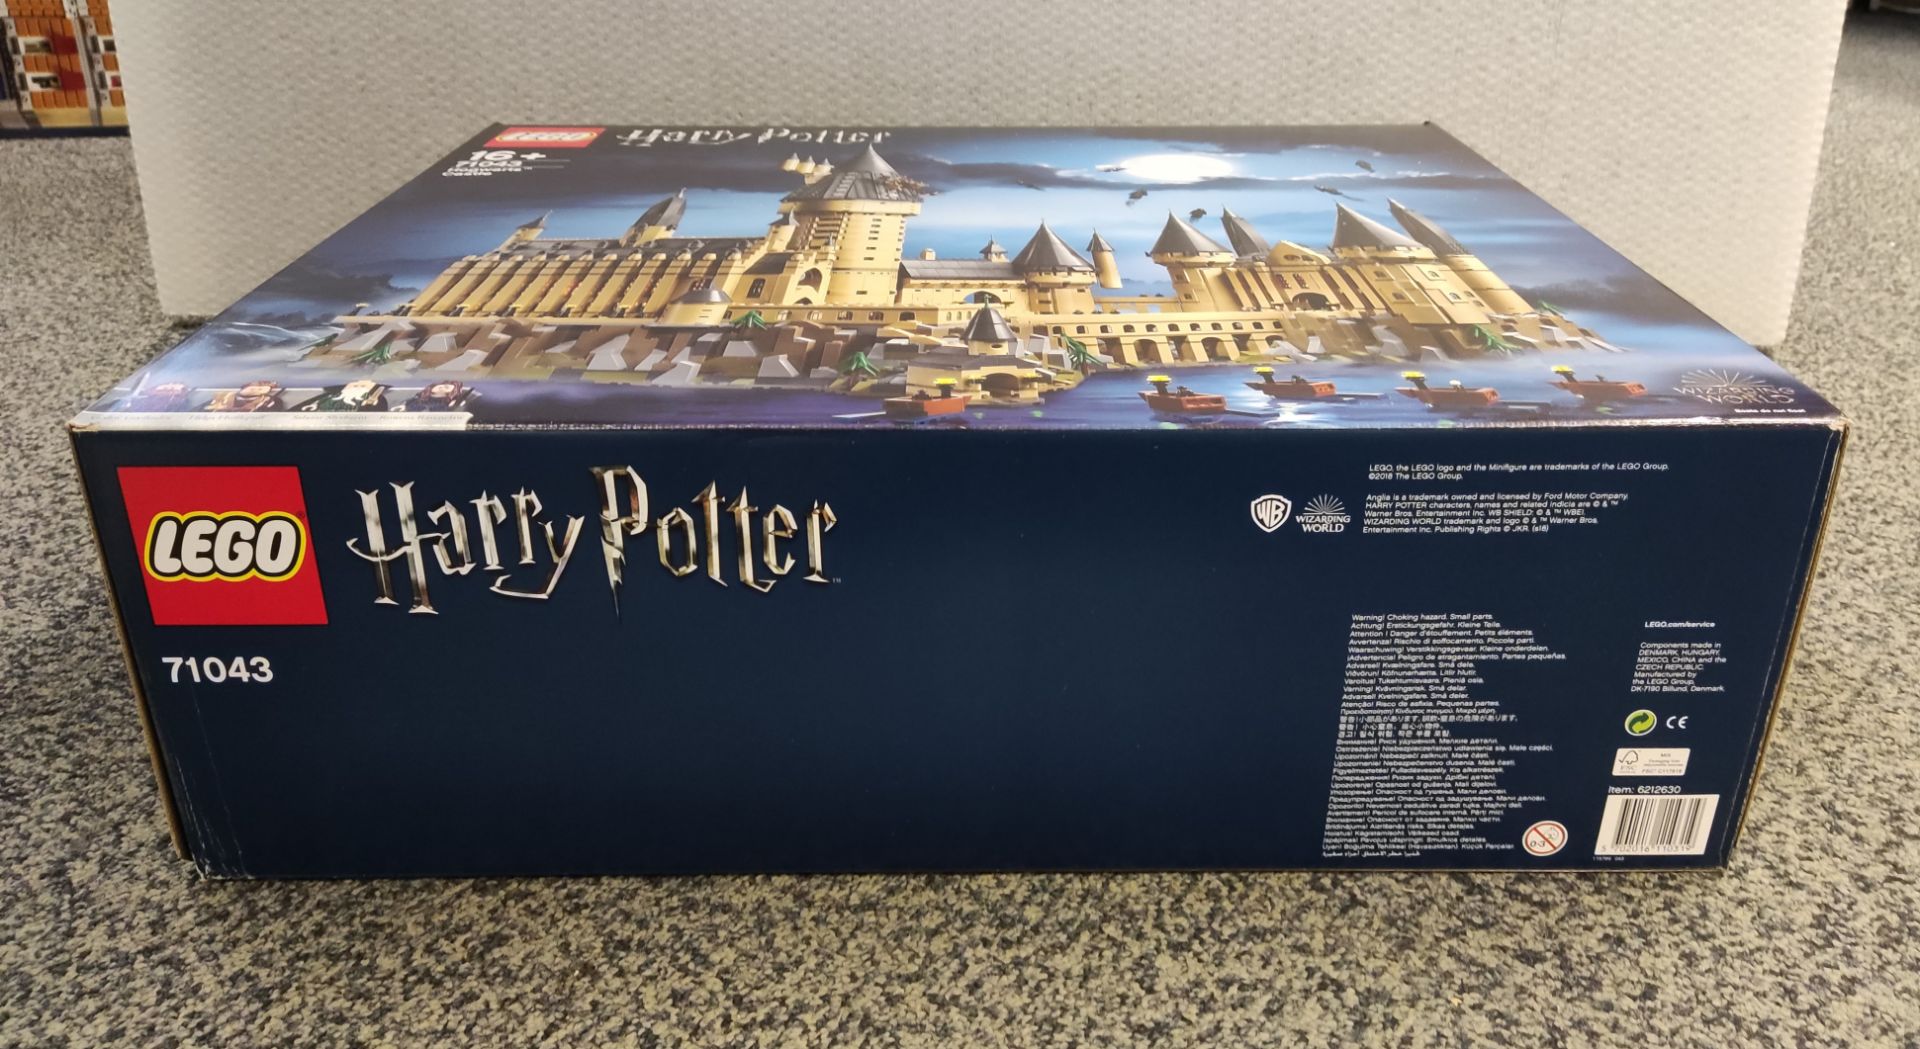 1 x Lego Harry Potter Hogwarts Castle - Set # 71043 - New/Boxed - JMCS136 - CL987 - Location: - Image 7 of 9